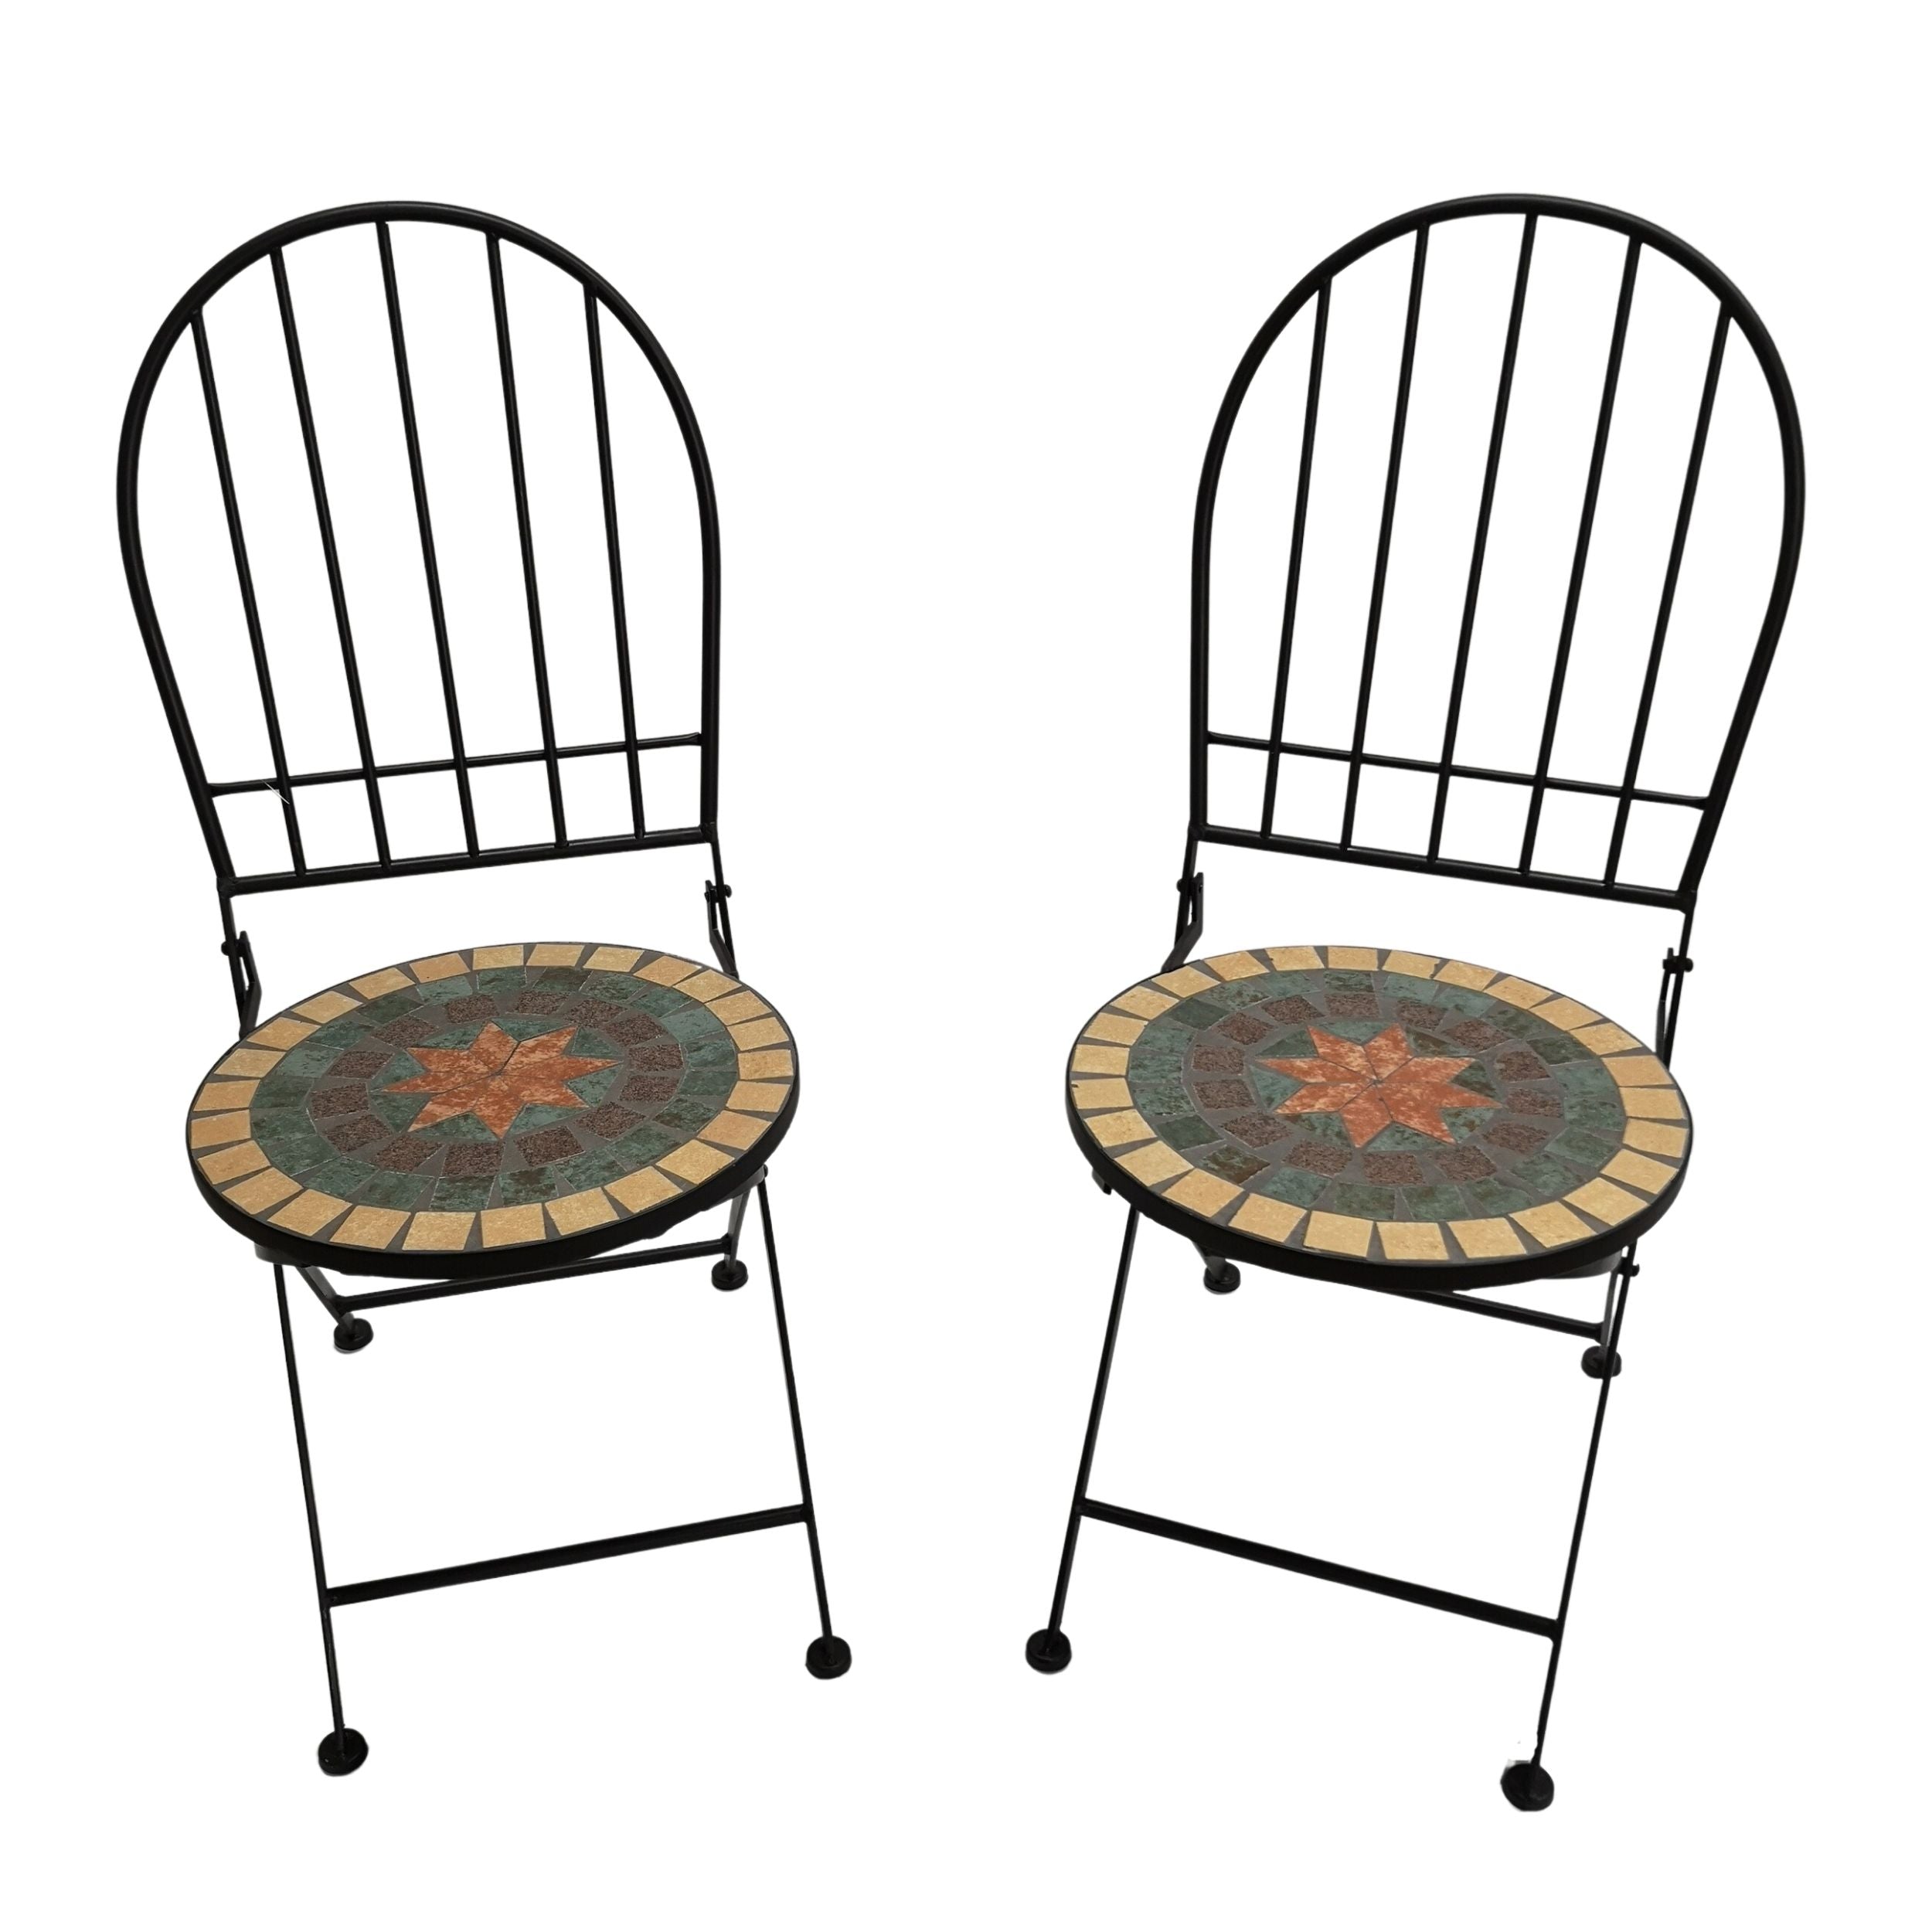 Set of 2 Outdoor Black Metal Bistro Chairs for Garden Patio Balcony